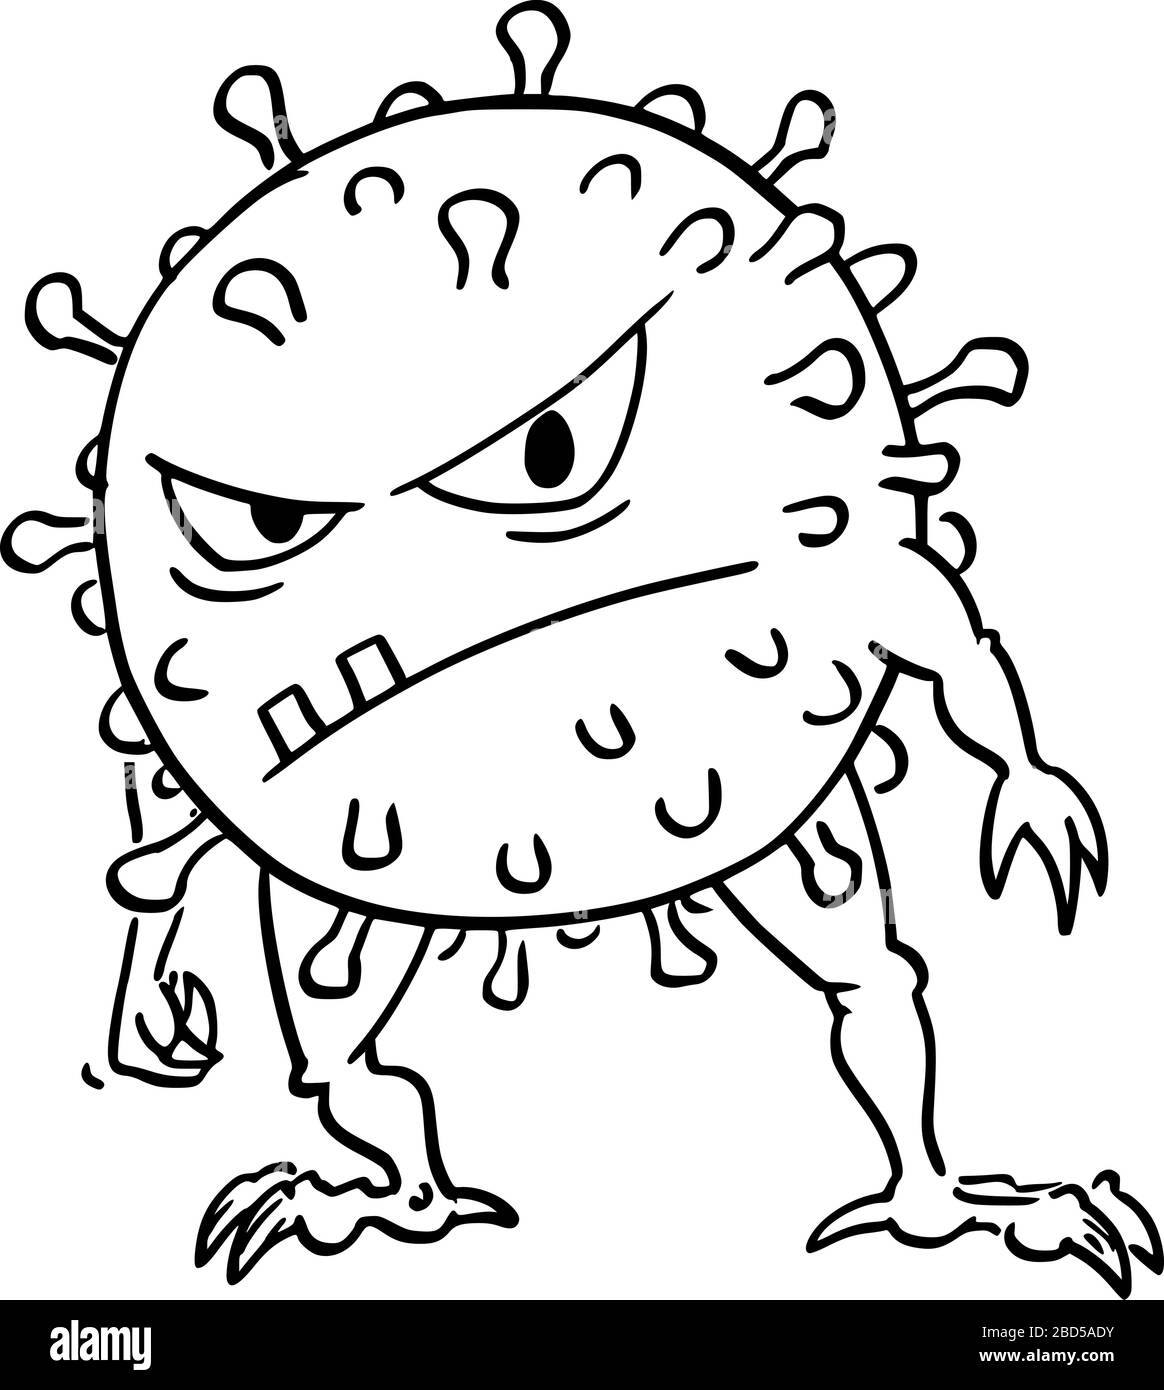 Vector Cartoon Funny Illustration Of Funny Crazy Coronavirus Covid